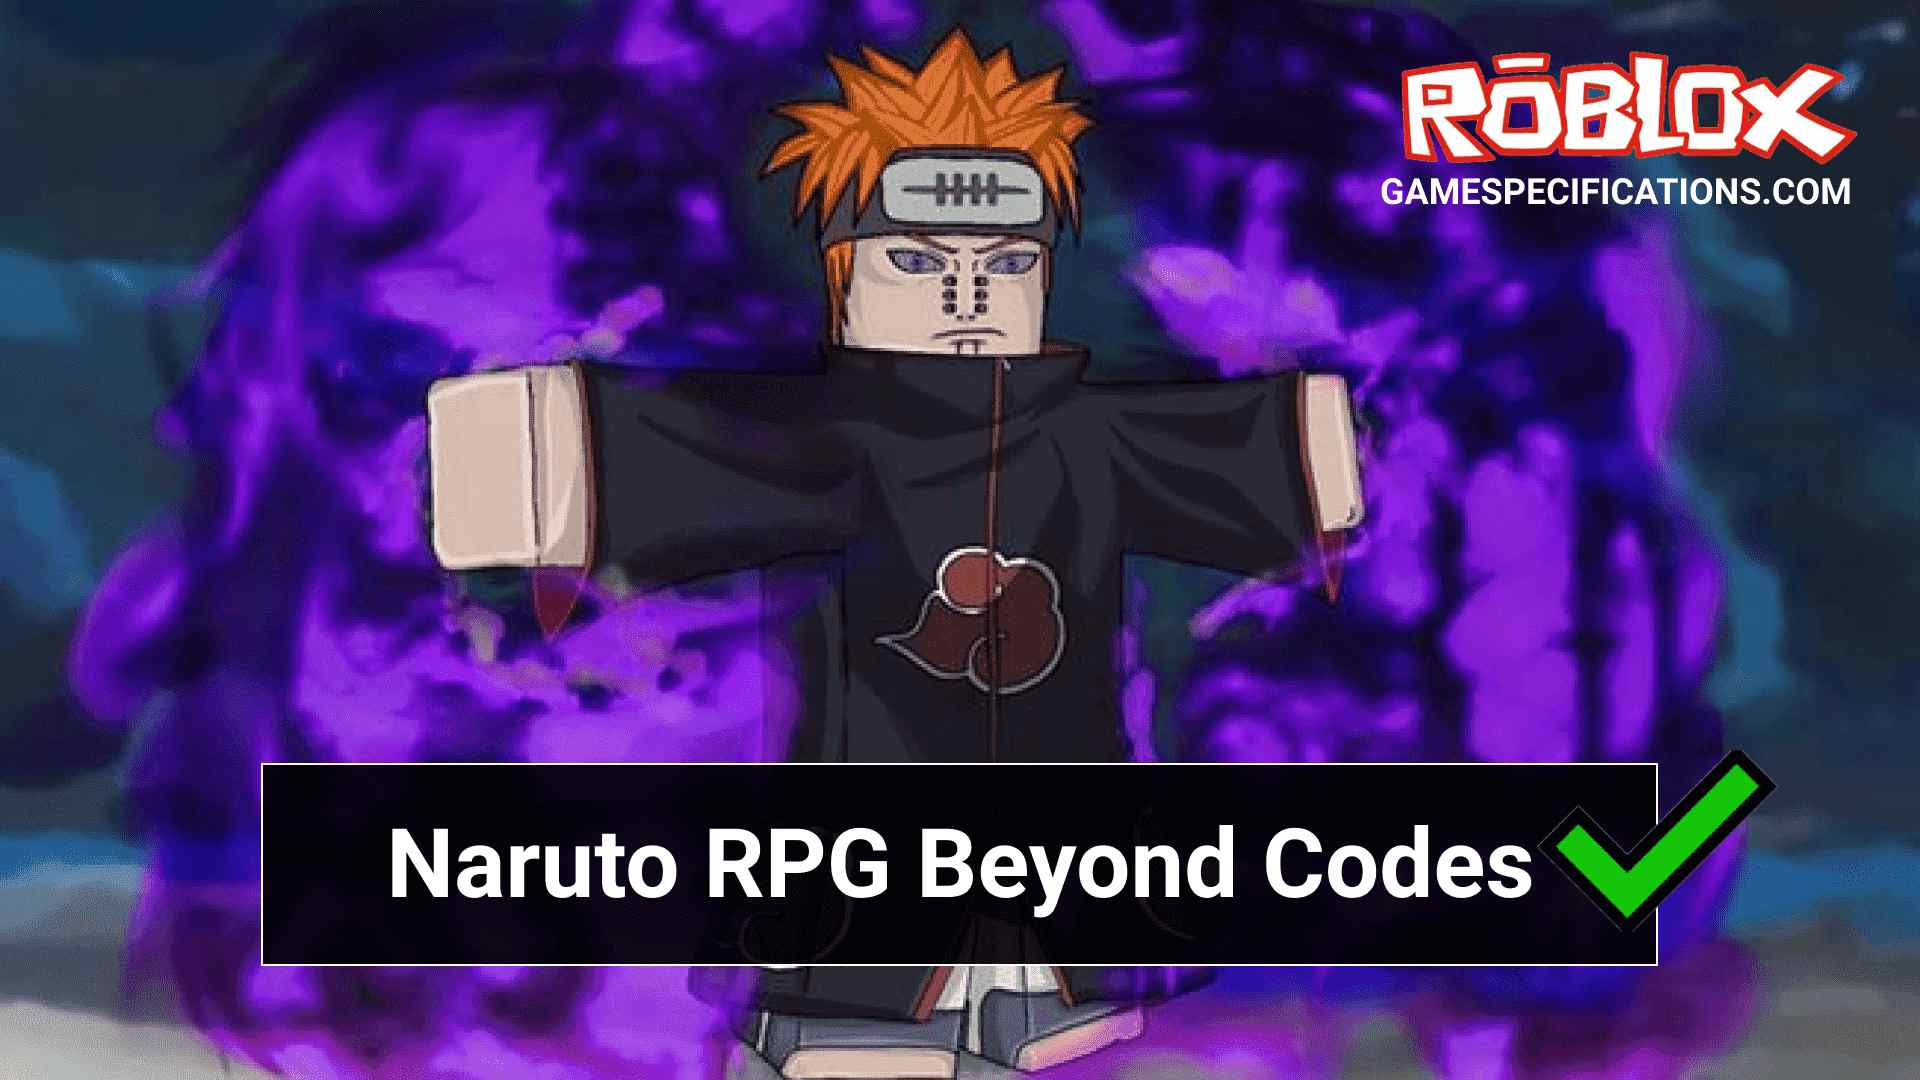 Codes For Naruto Shippuden Rpg Roblox - Bank2home.com